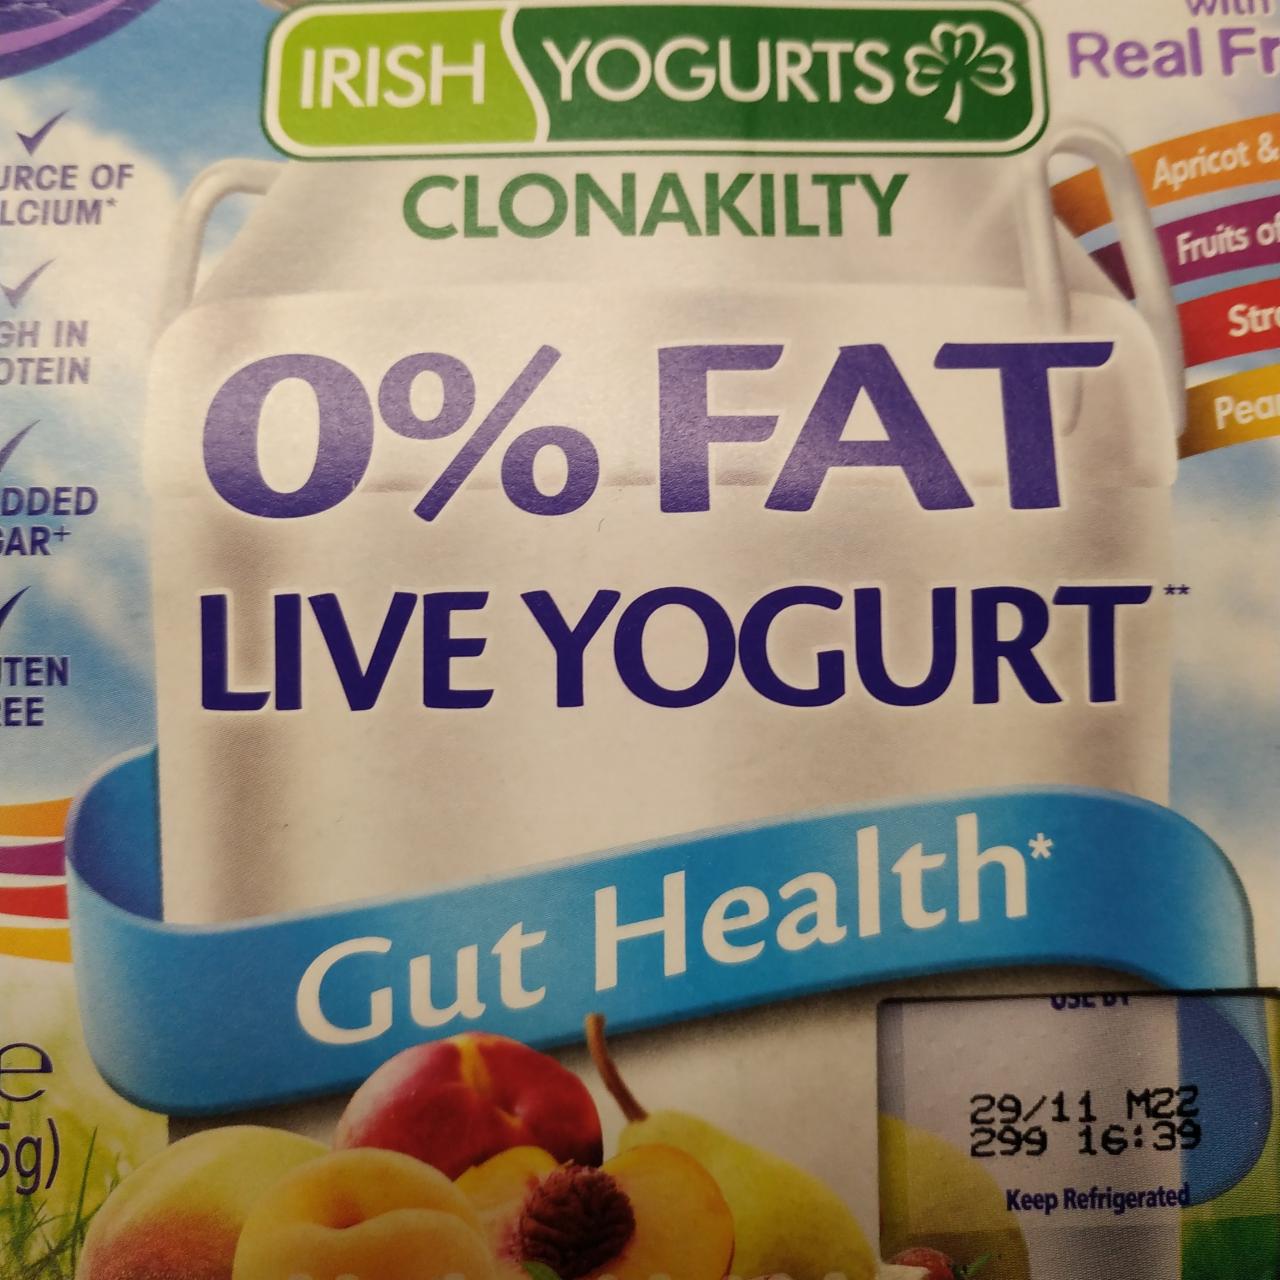 Fotografie - Clonakilty 0% fat live yogurt IrishYogurts